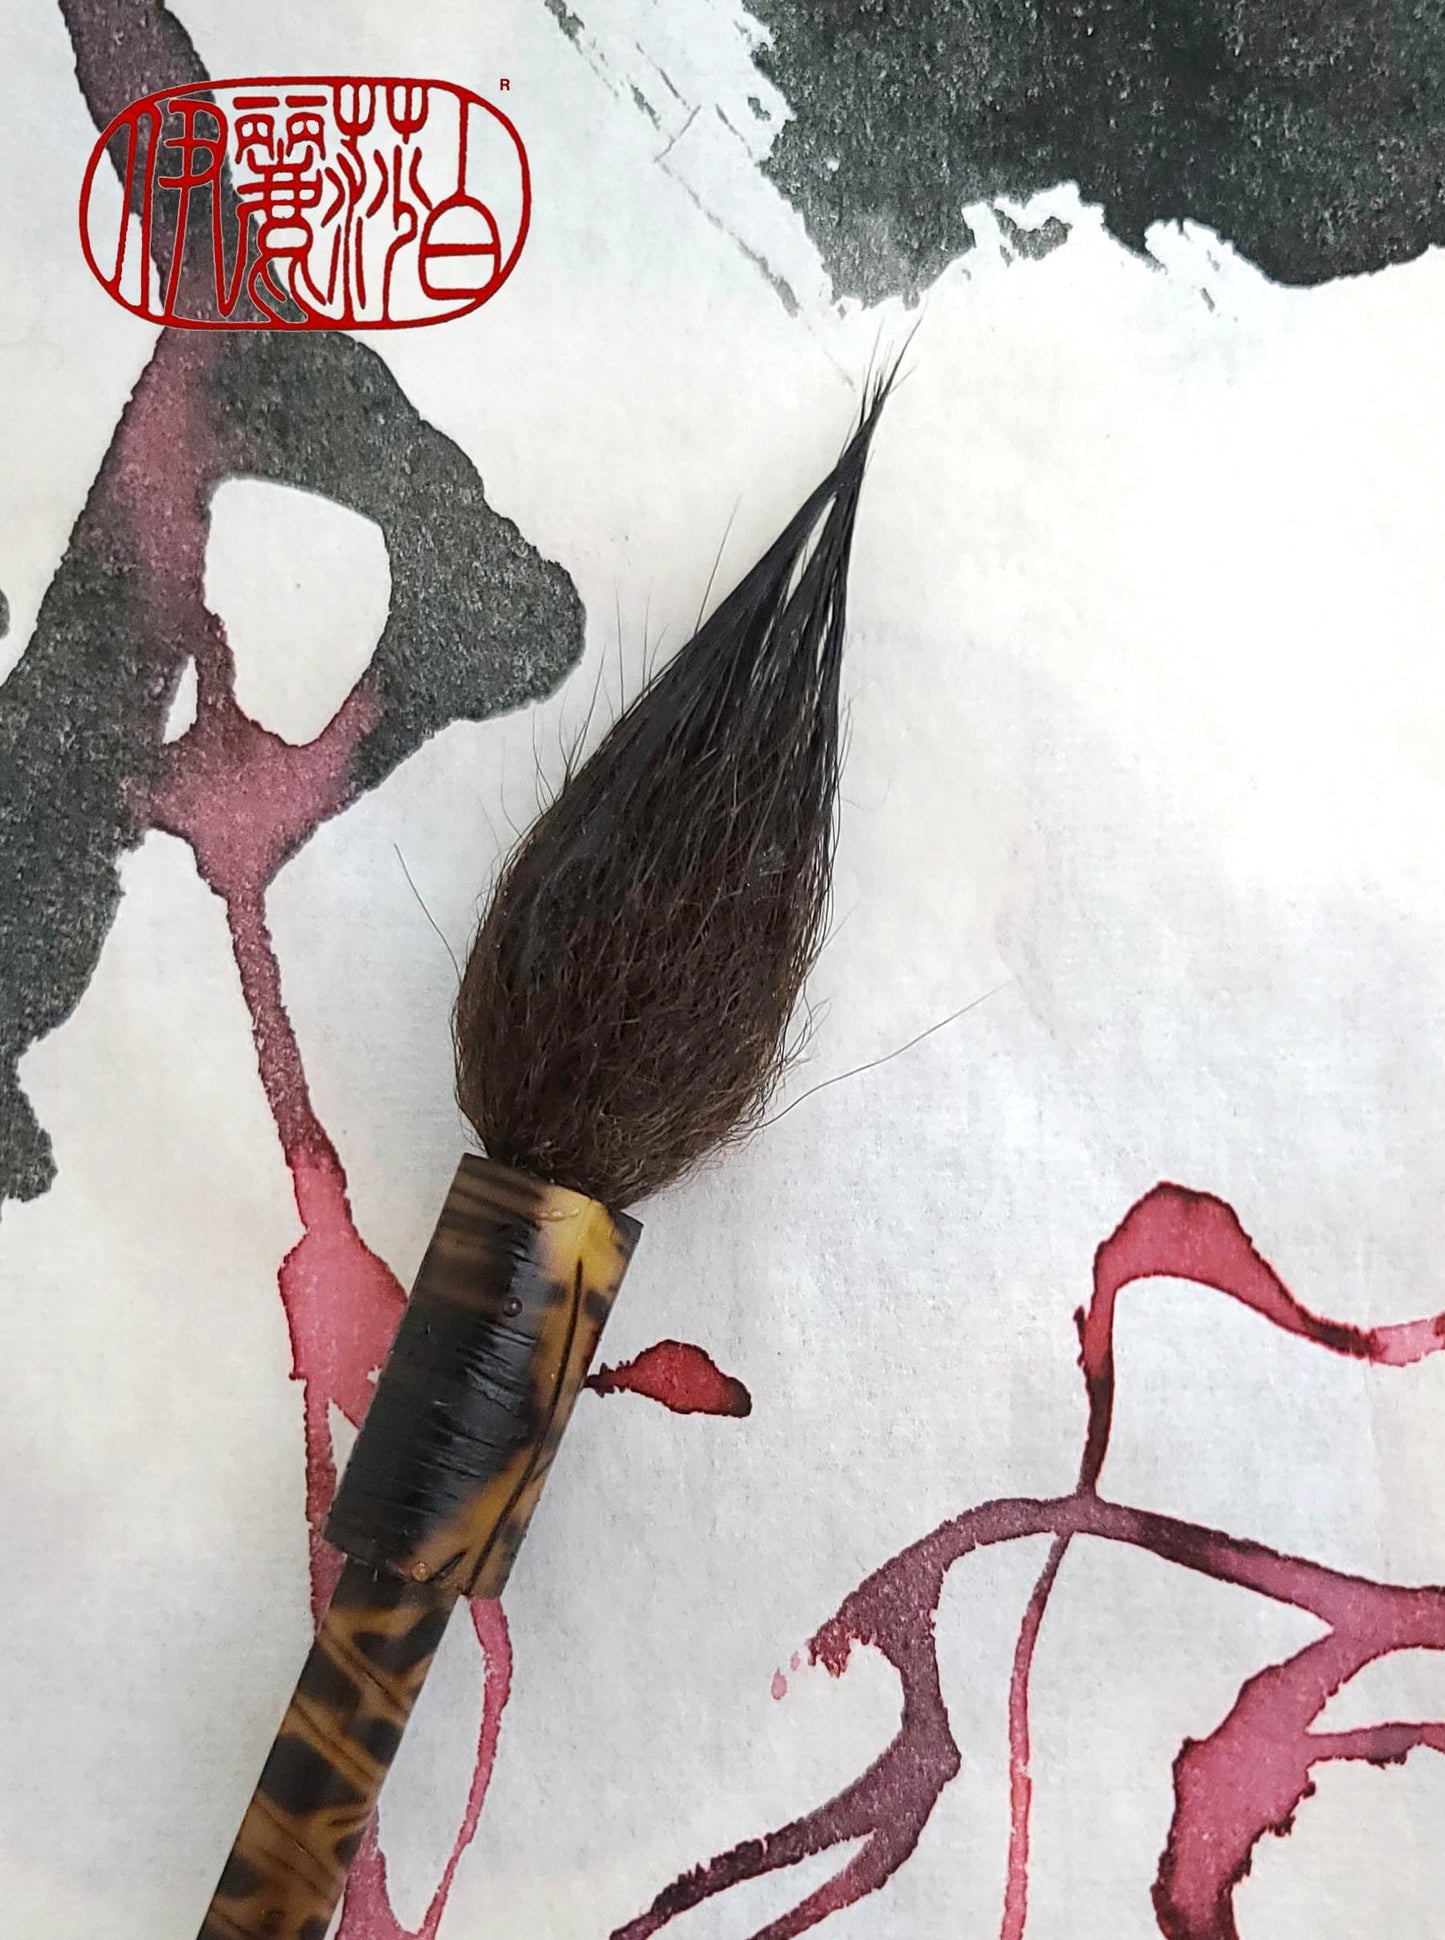 Natural Skunk Paintbrushes With Bamboo Handles Art & Crafting Tools Elizabeth Schowachert Art